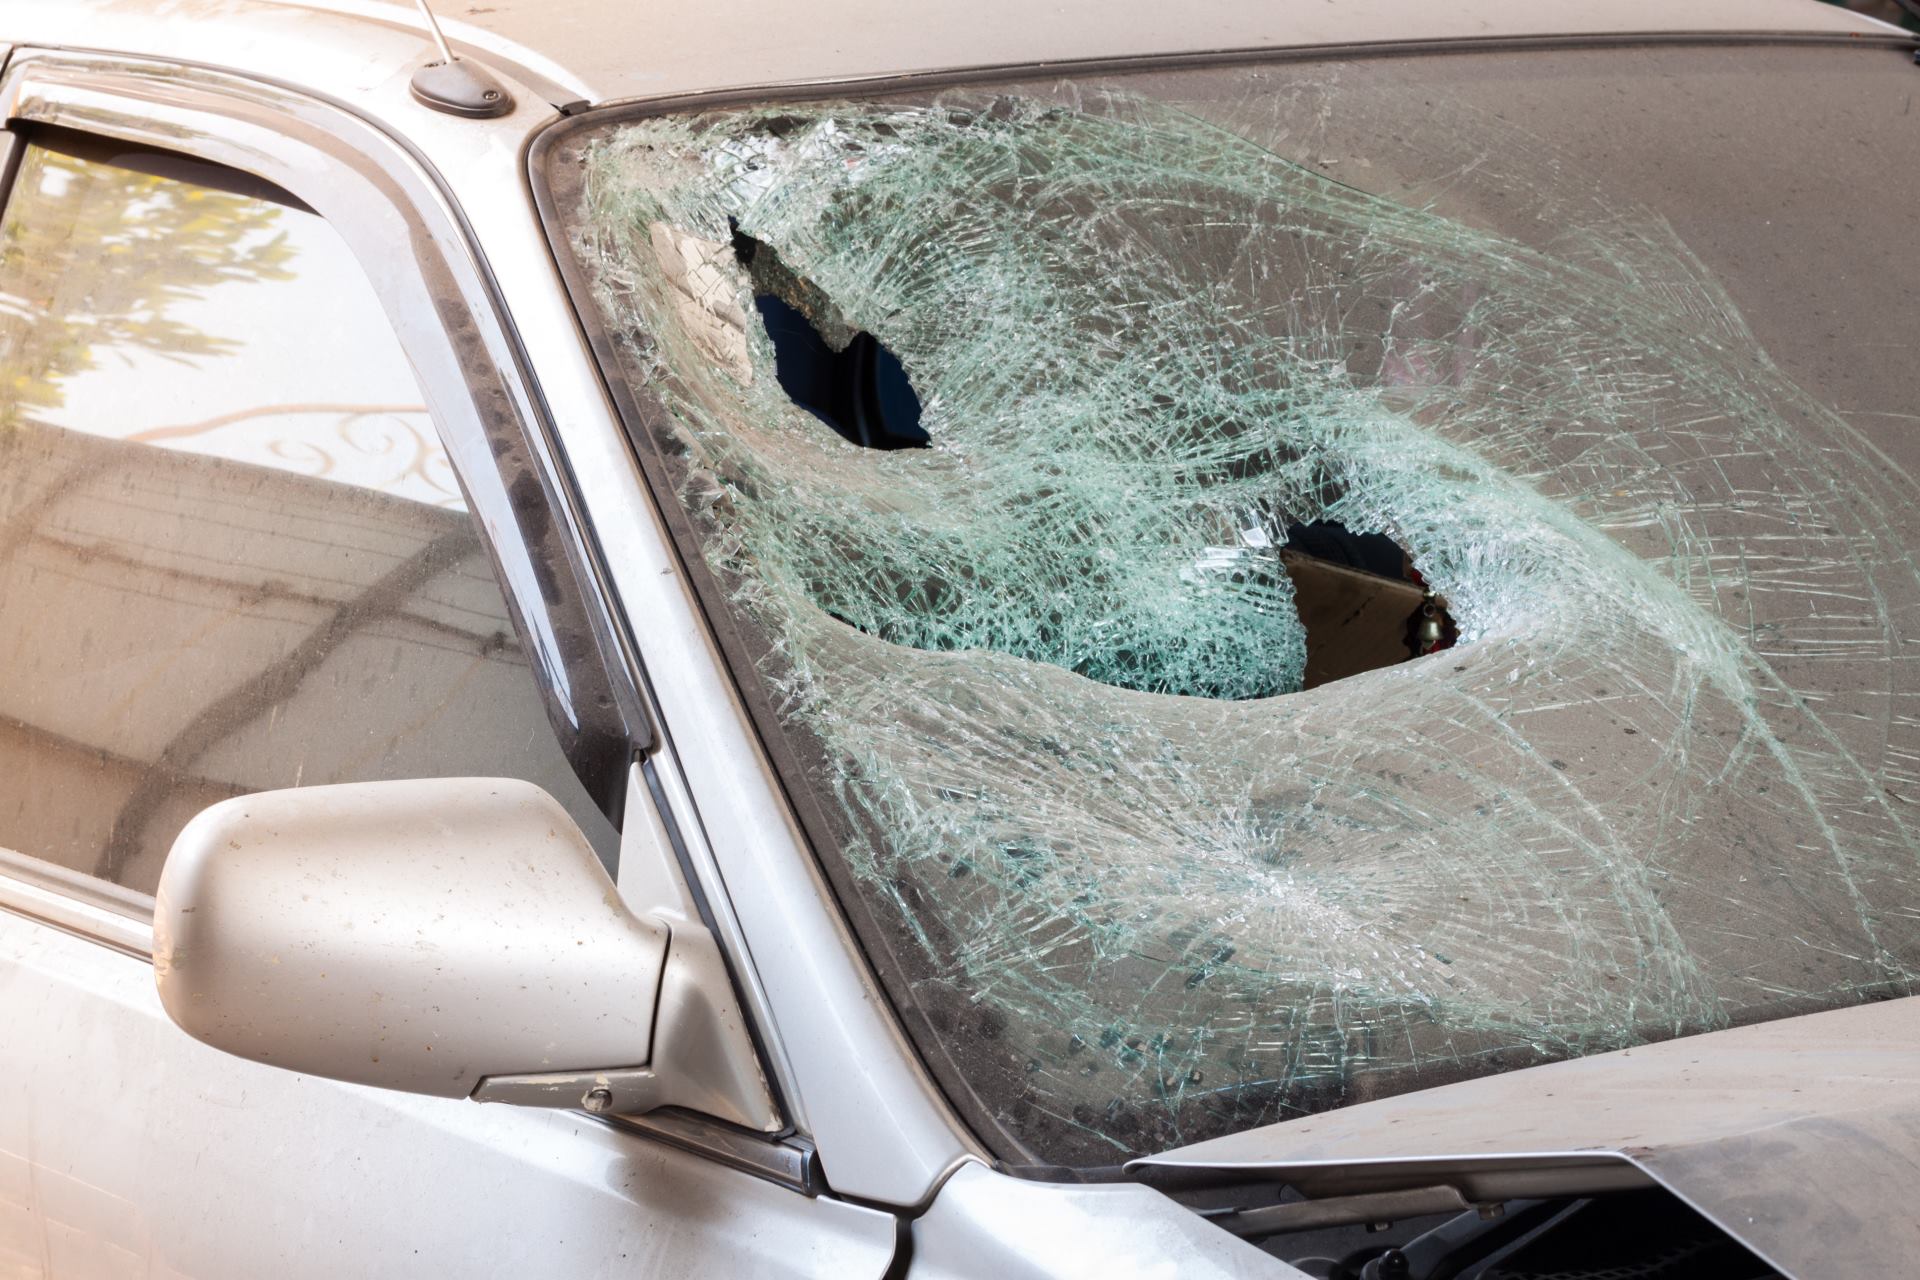 Разбитое лобовое стекло машины. Разбитое лобовое стекло. Разбитое стекло автомобиля. Разбитое автомобильное стекло. Разбитое автомобильное стекло машинное.